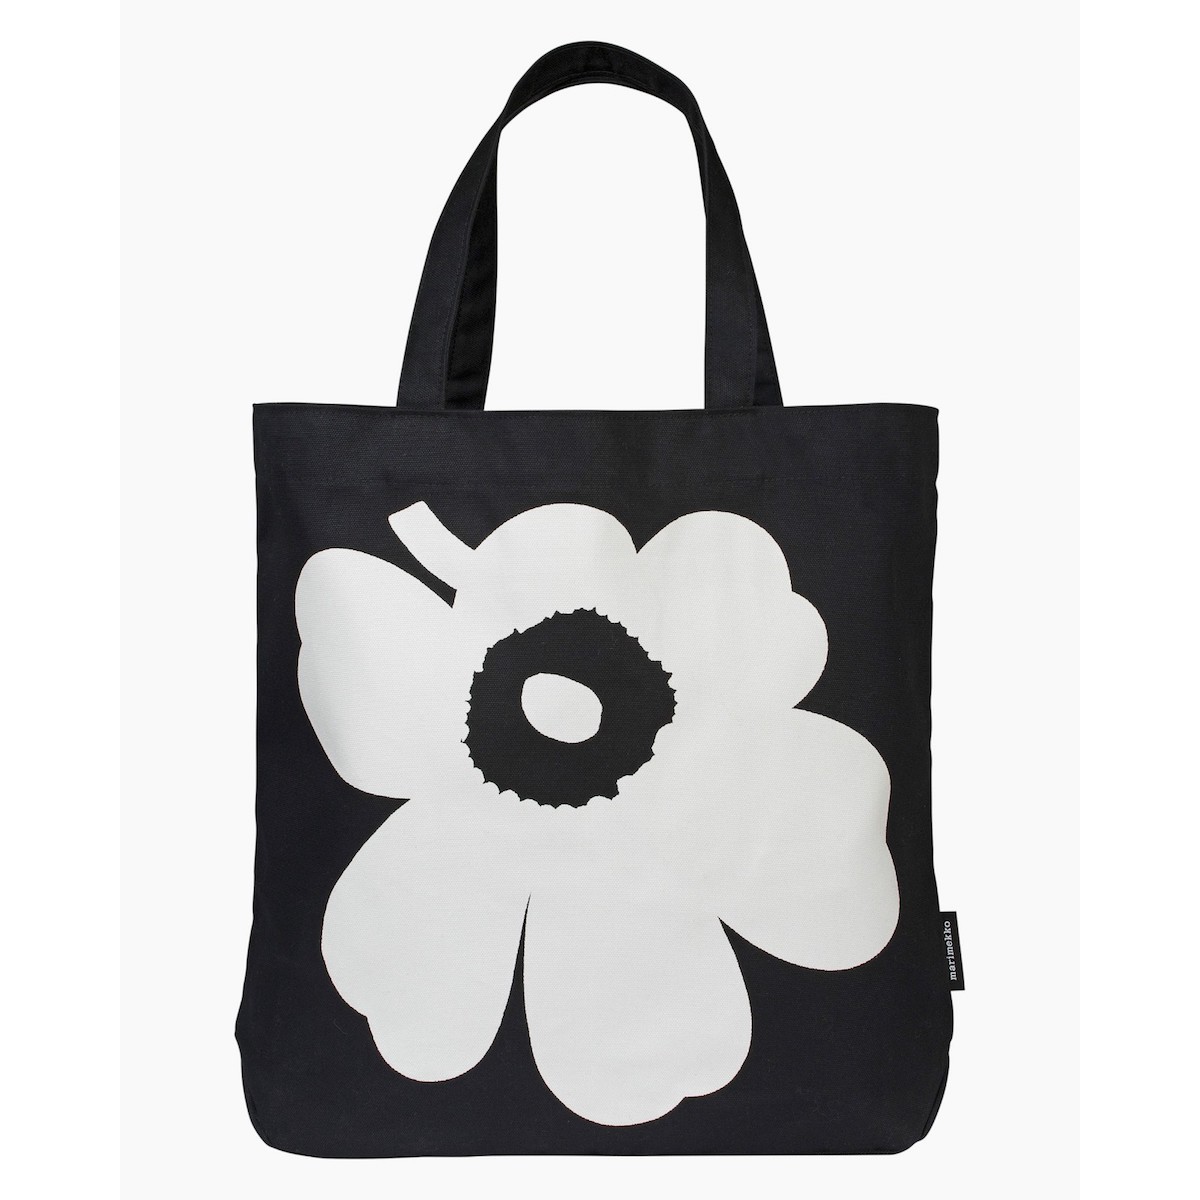 Torna Unikko - black, white 910 - Marimekko bag